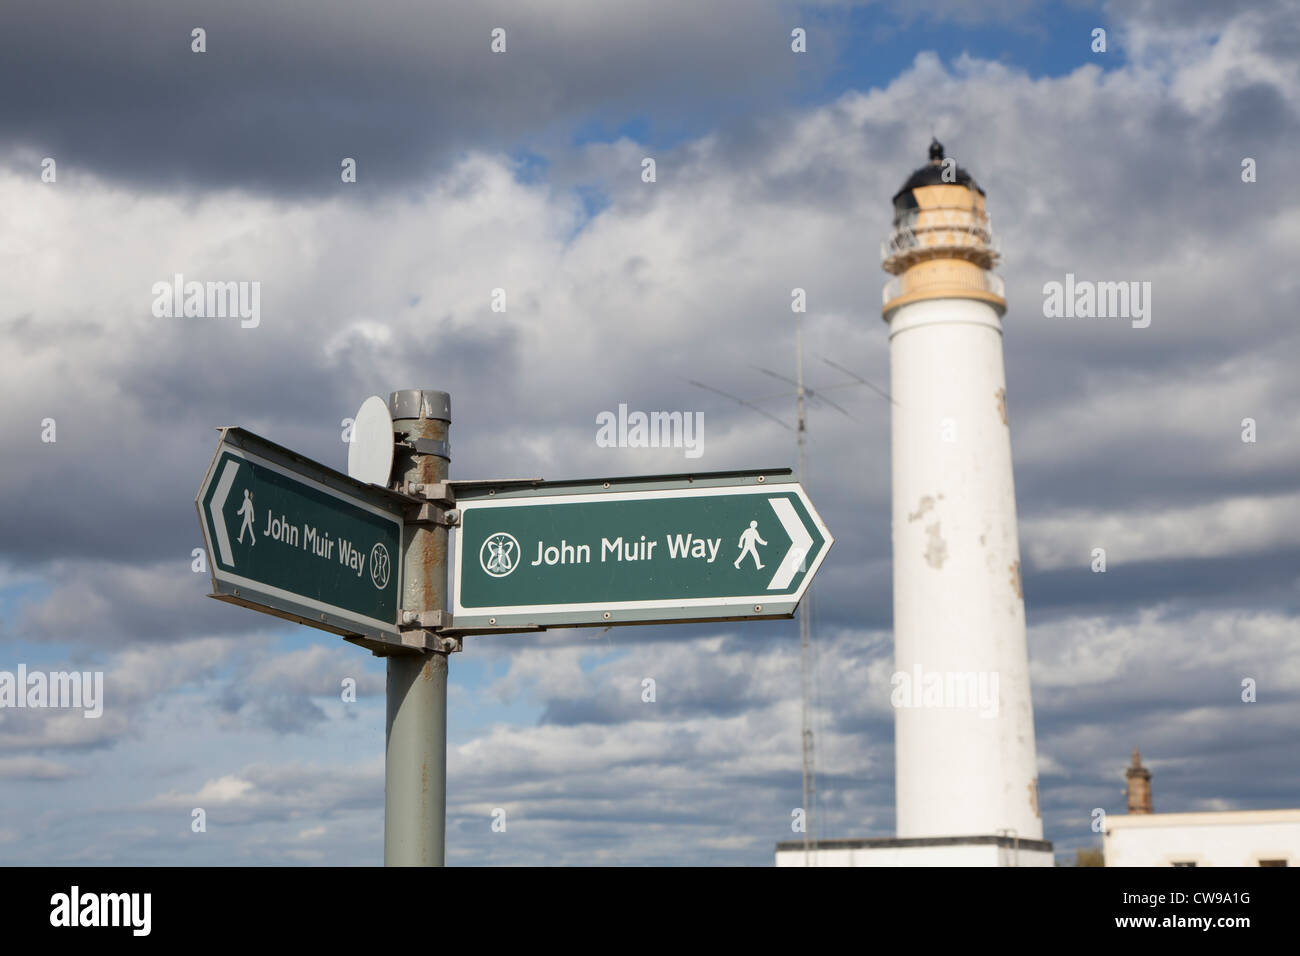 Signpost for the John Muir Way, at Barn's Ness lighthouse, near Dunbar, Lothian, Scotland Stock Photo